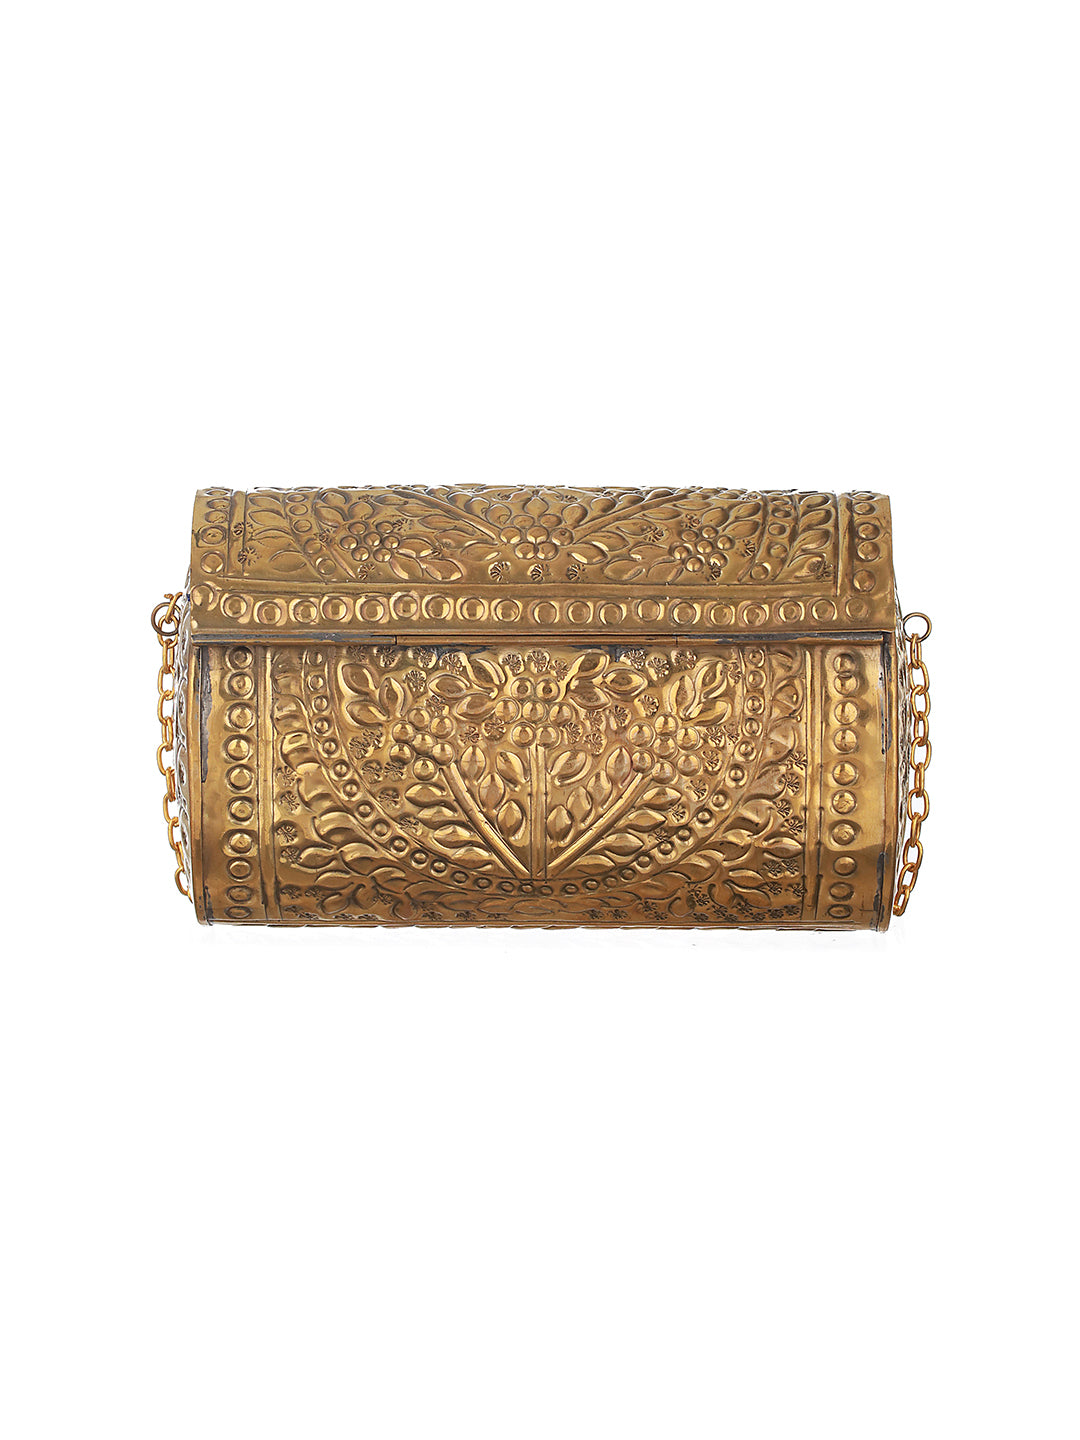 Floral Textured Golden Metallic Clutch Sling Bag